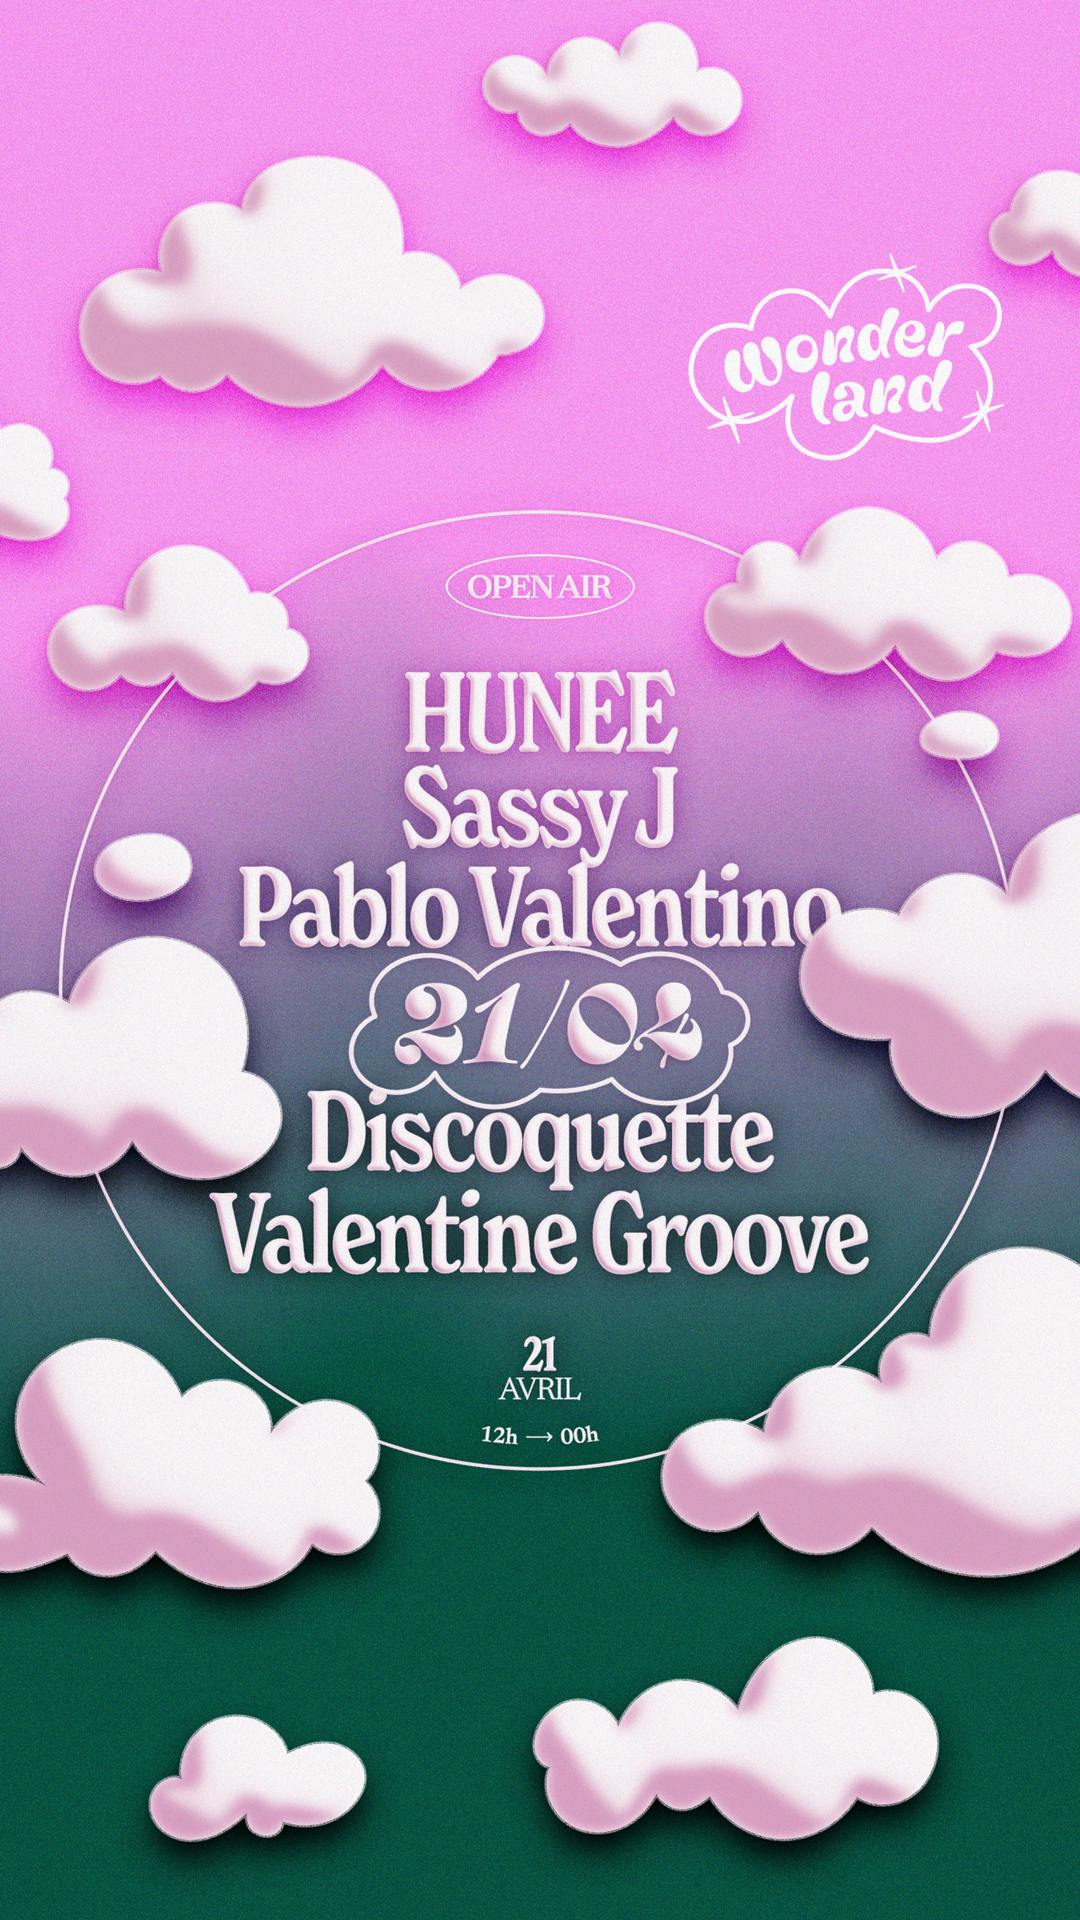 Wonderland invite: Hunee l Sassy J l Pablo Valentino - フライヤー裏